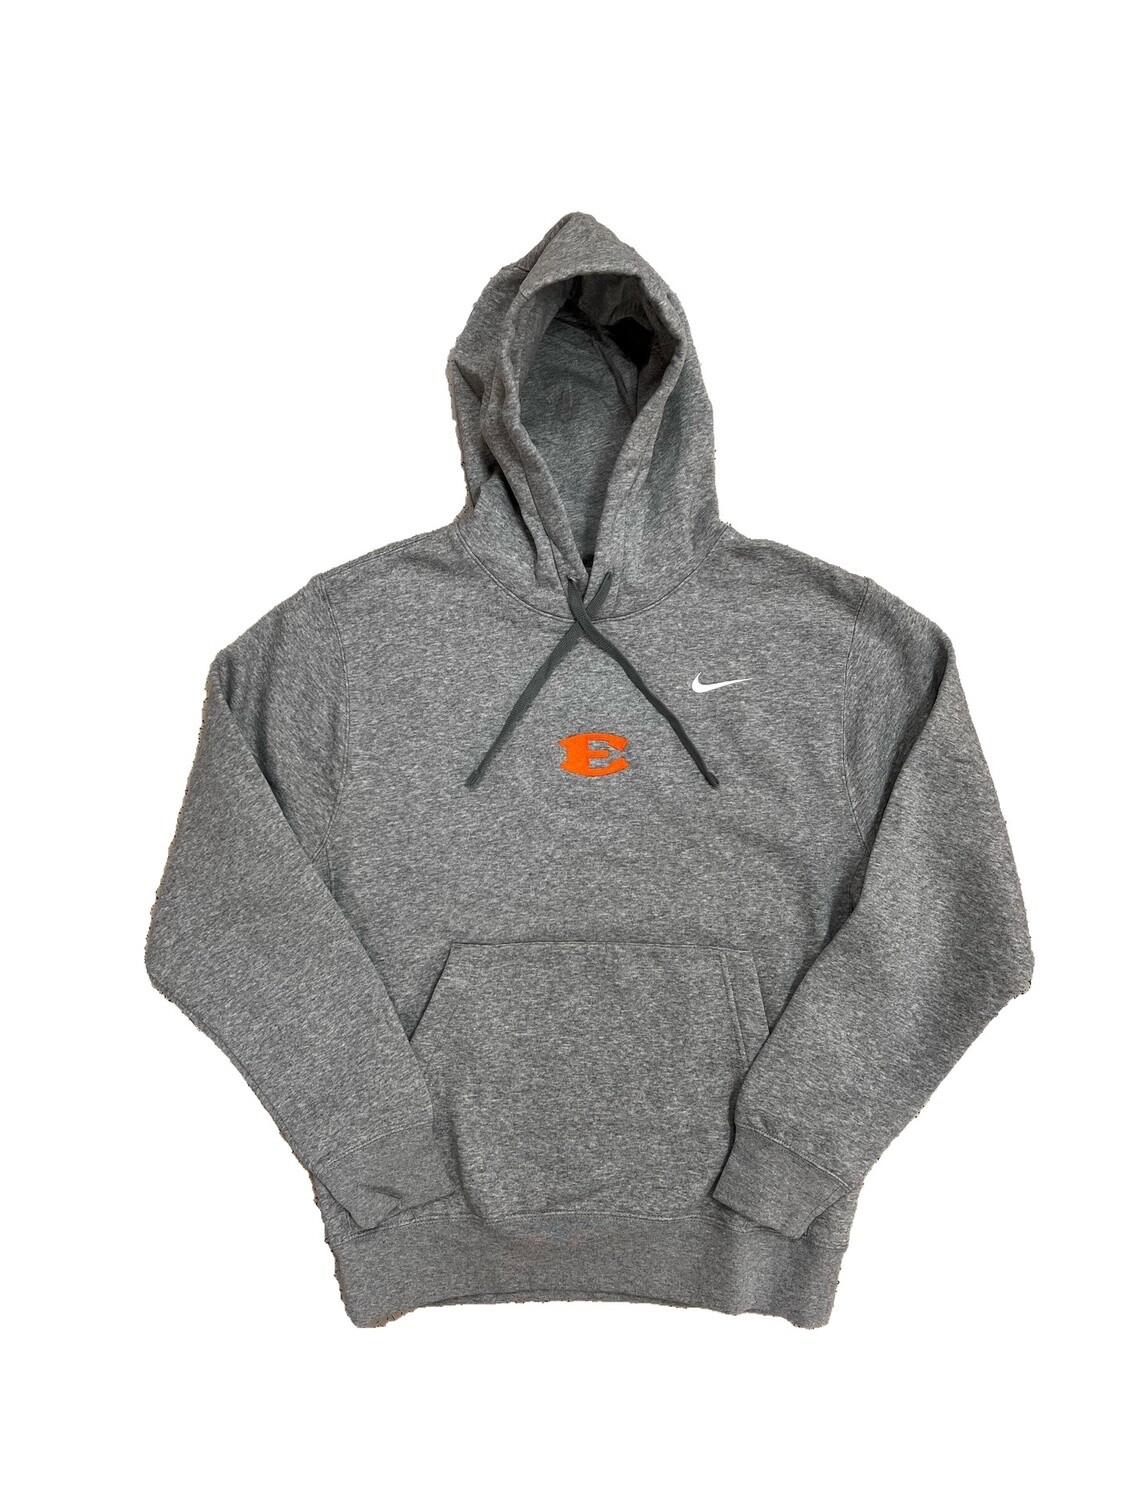 Nike Youth/Adult Gray Hoodie Sweatshirt